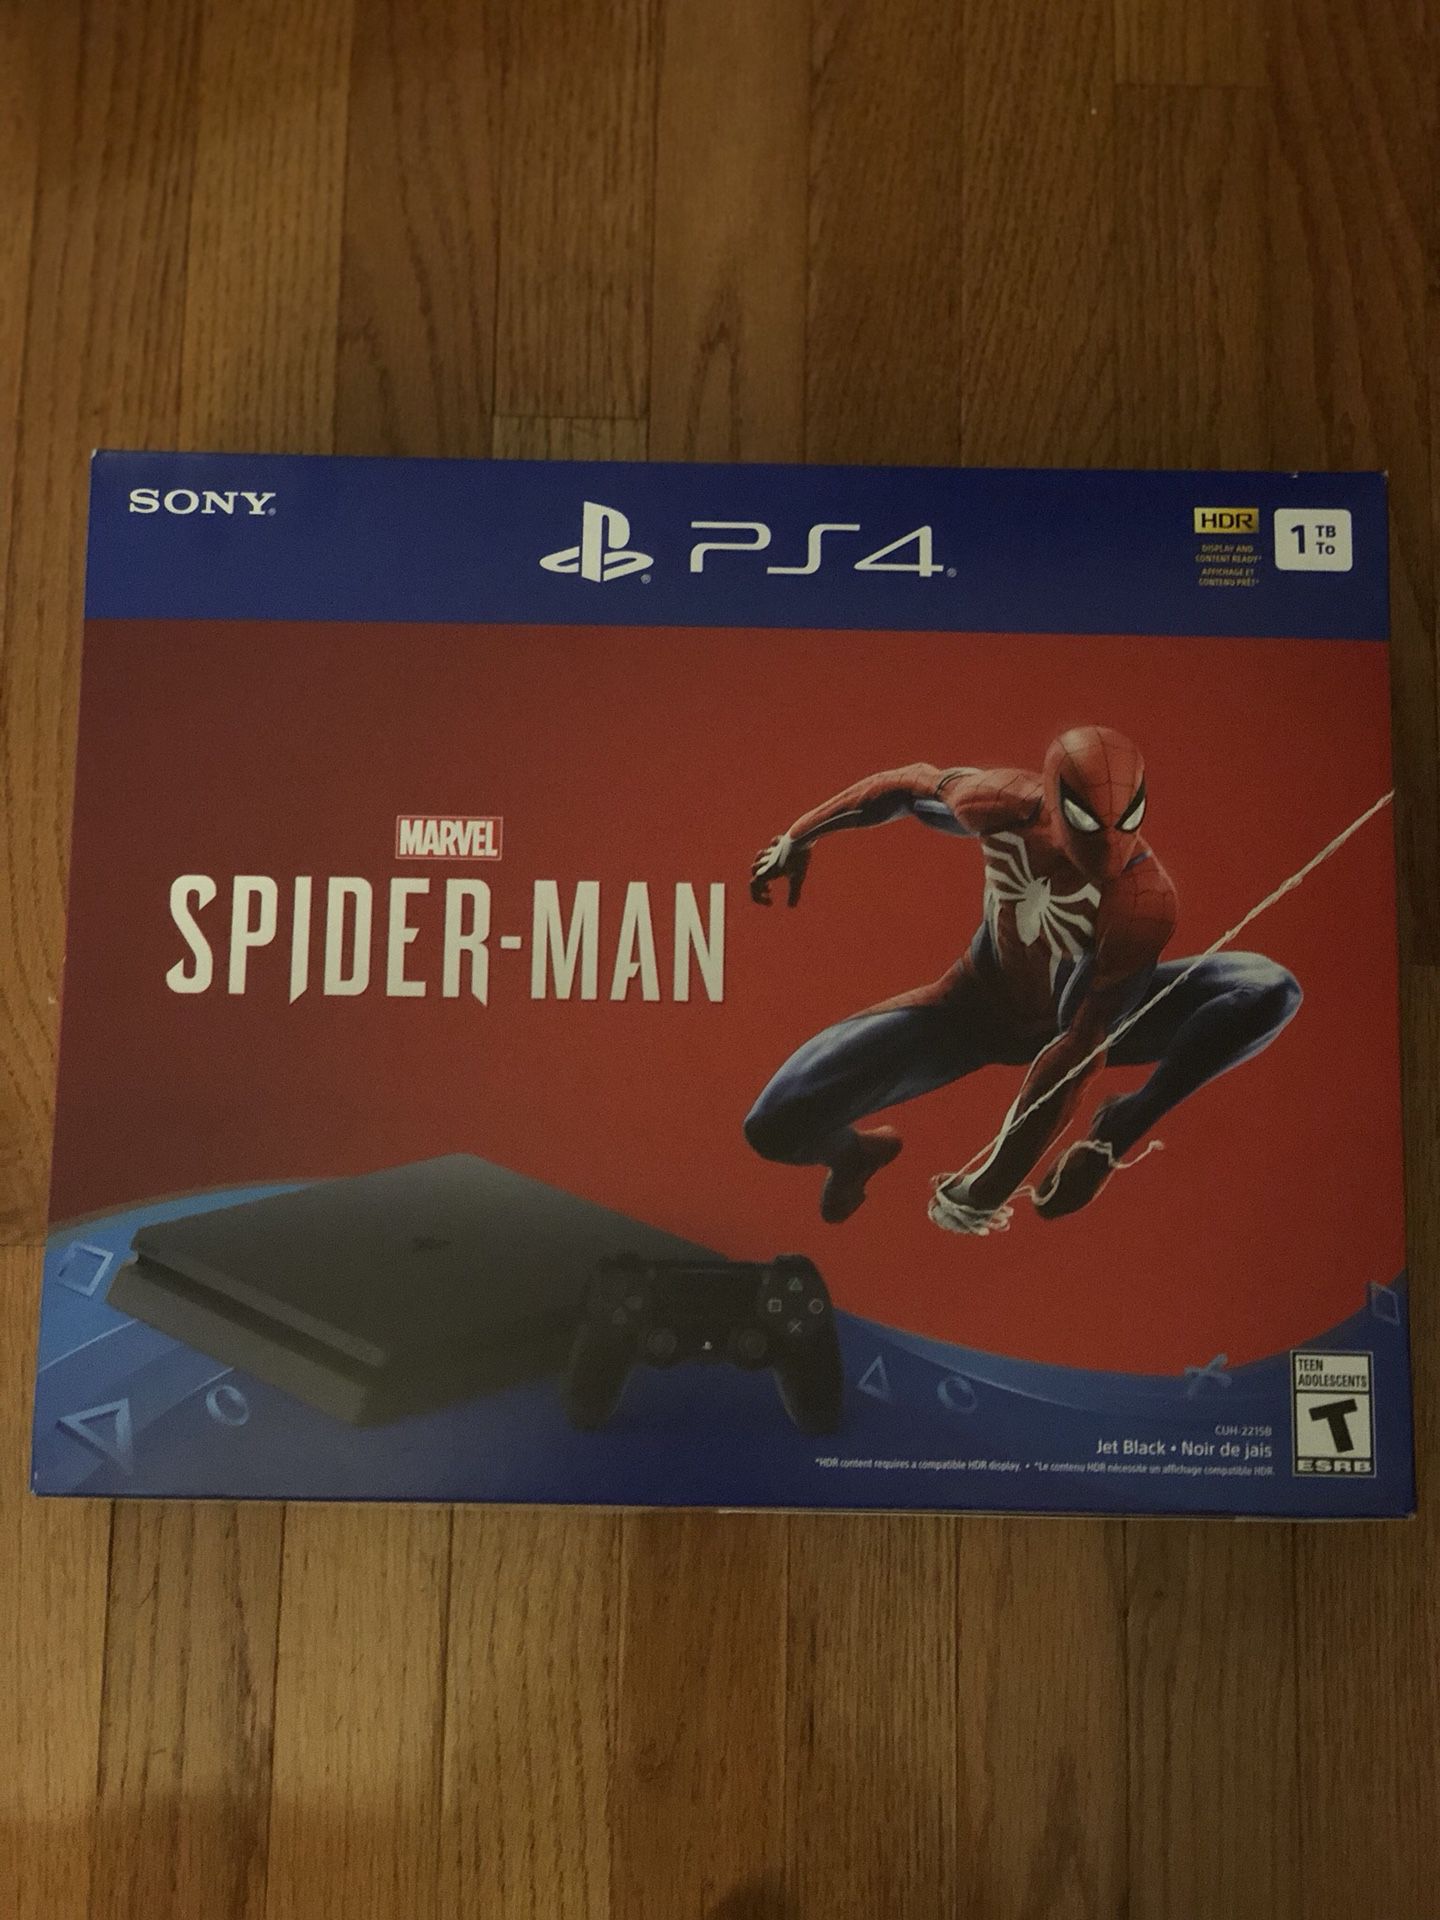 Playstation 4 (PS4) Spiderman Bundle